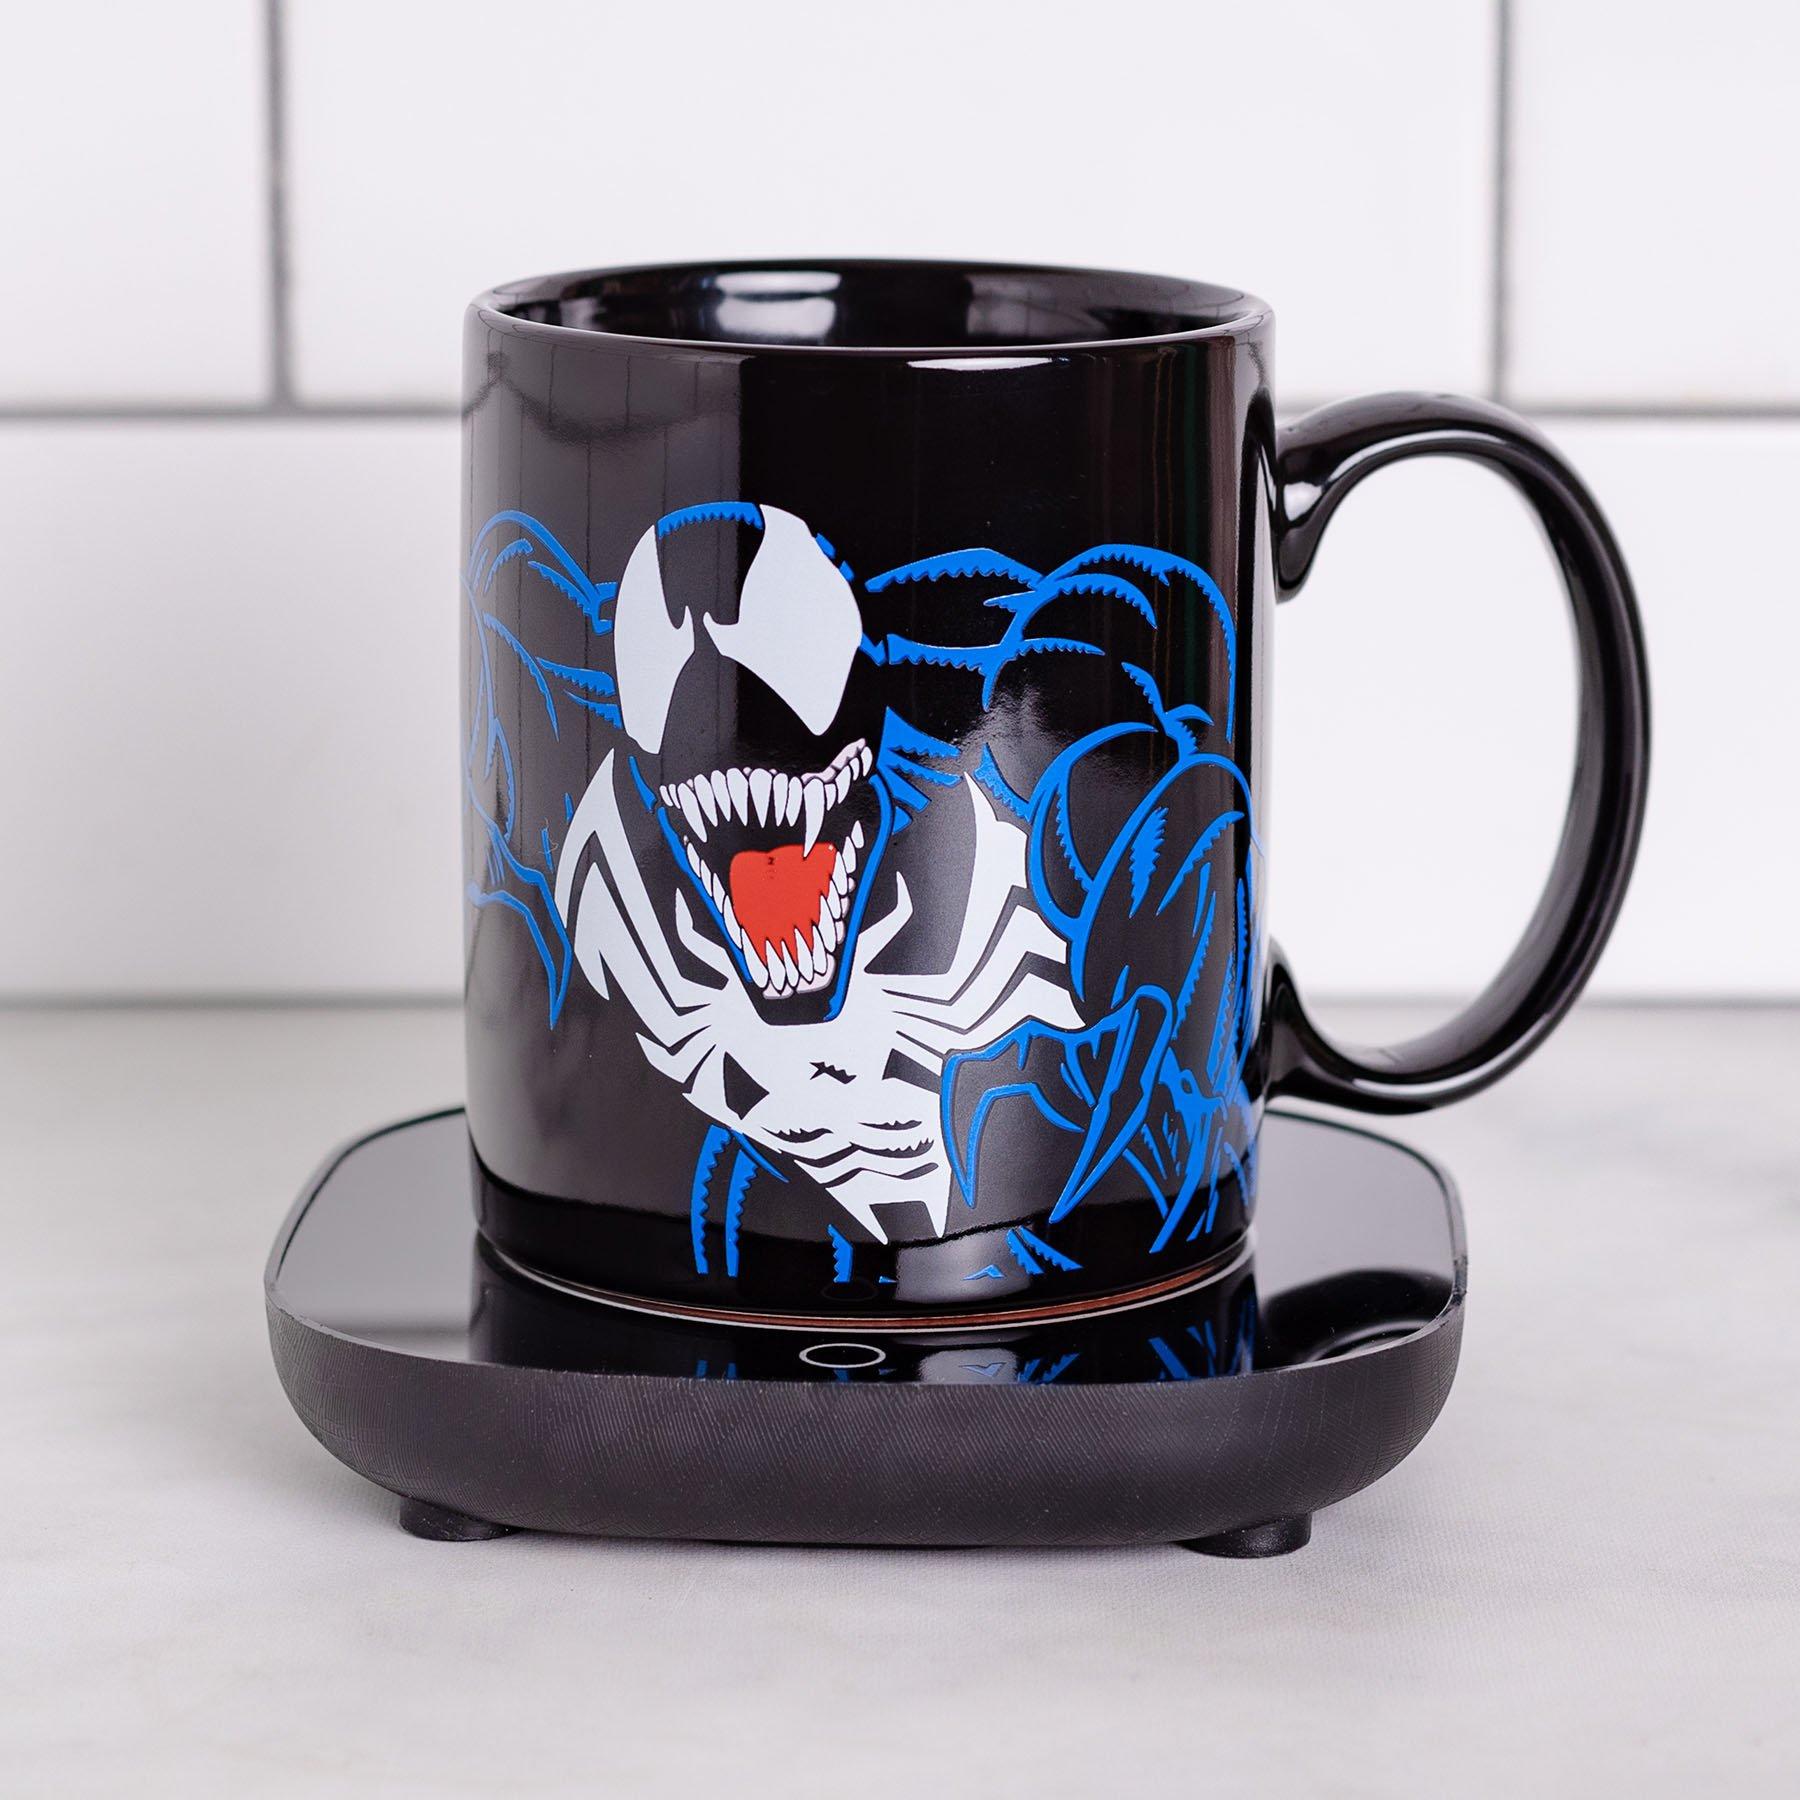 https://media.gamestop.com/i/gamestop/20005652_ALT01/Marvels-Venom-Mug-Warmer-with-Mug?$pdp$